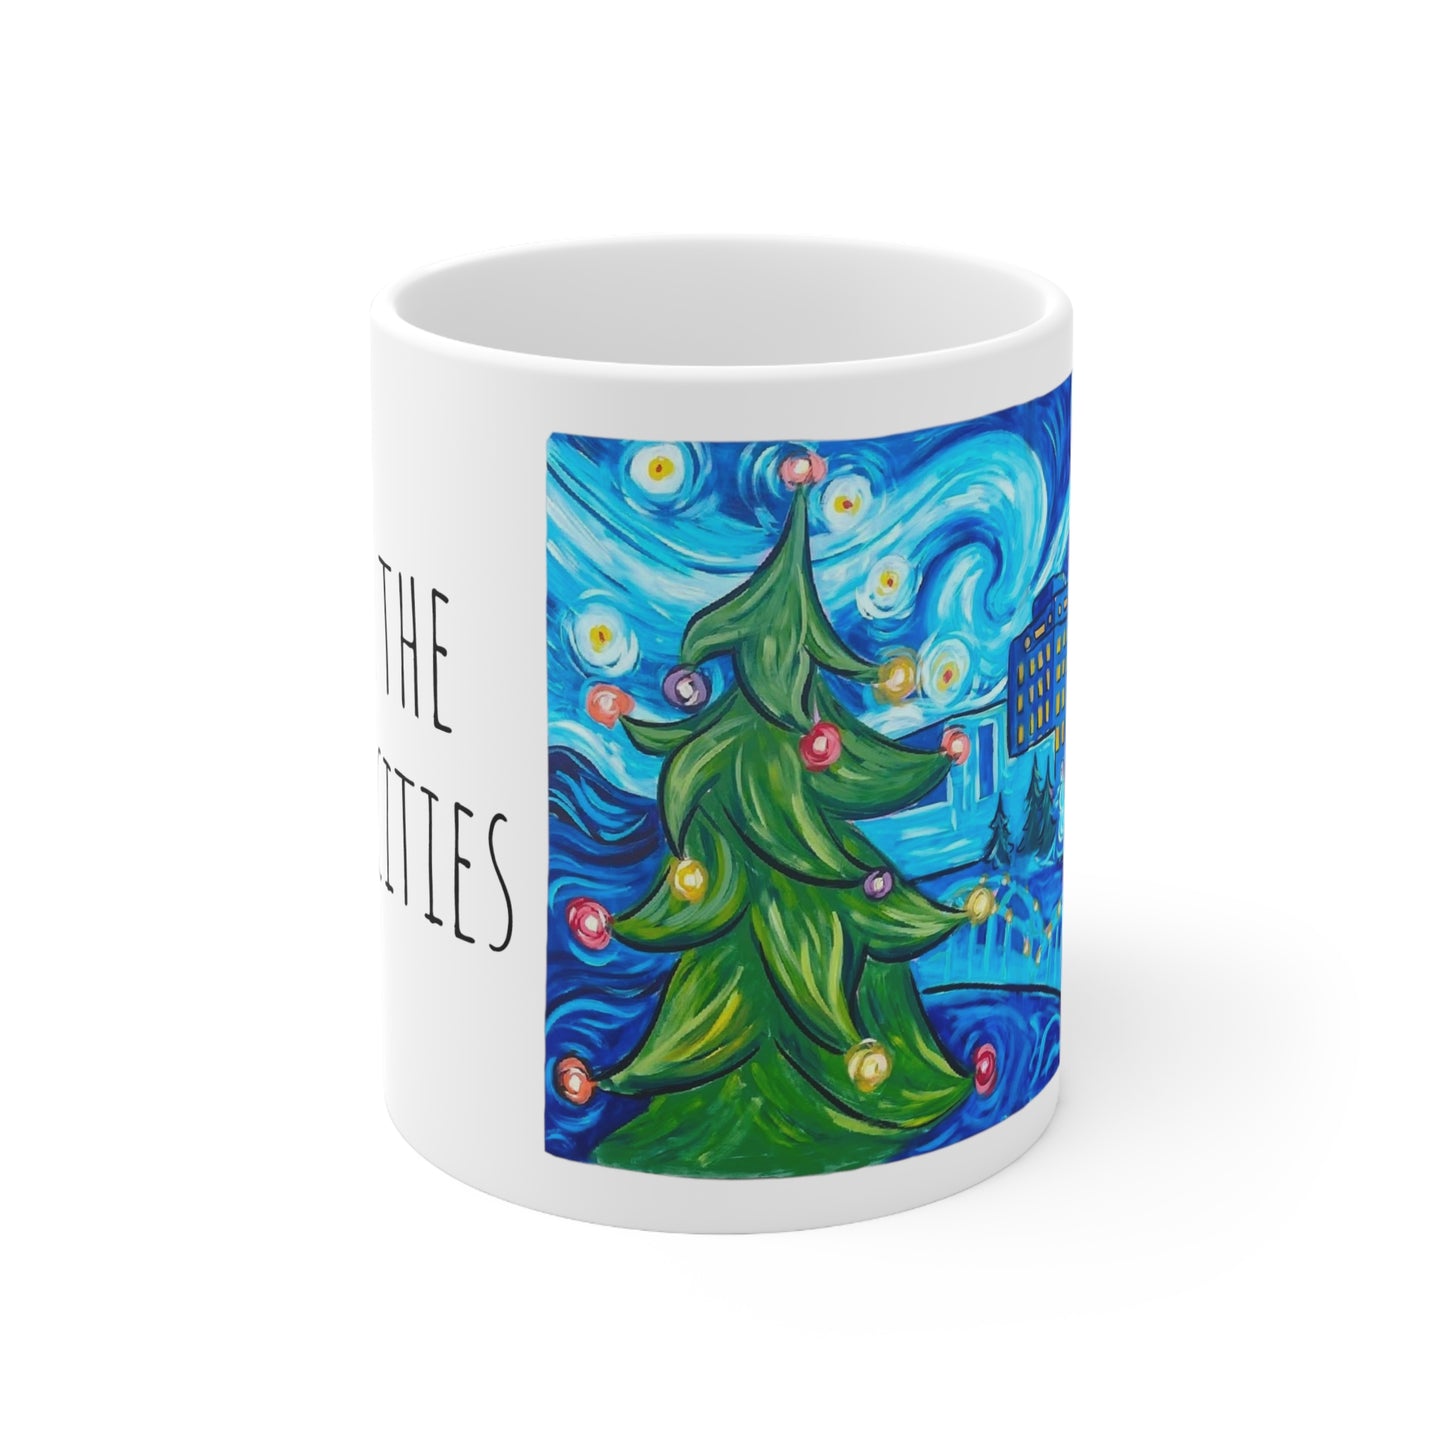 Quad City Starry Night Mug Coffee Lover Holiday Gift Van Gogh Inspired